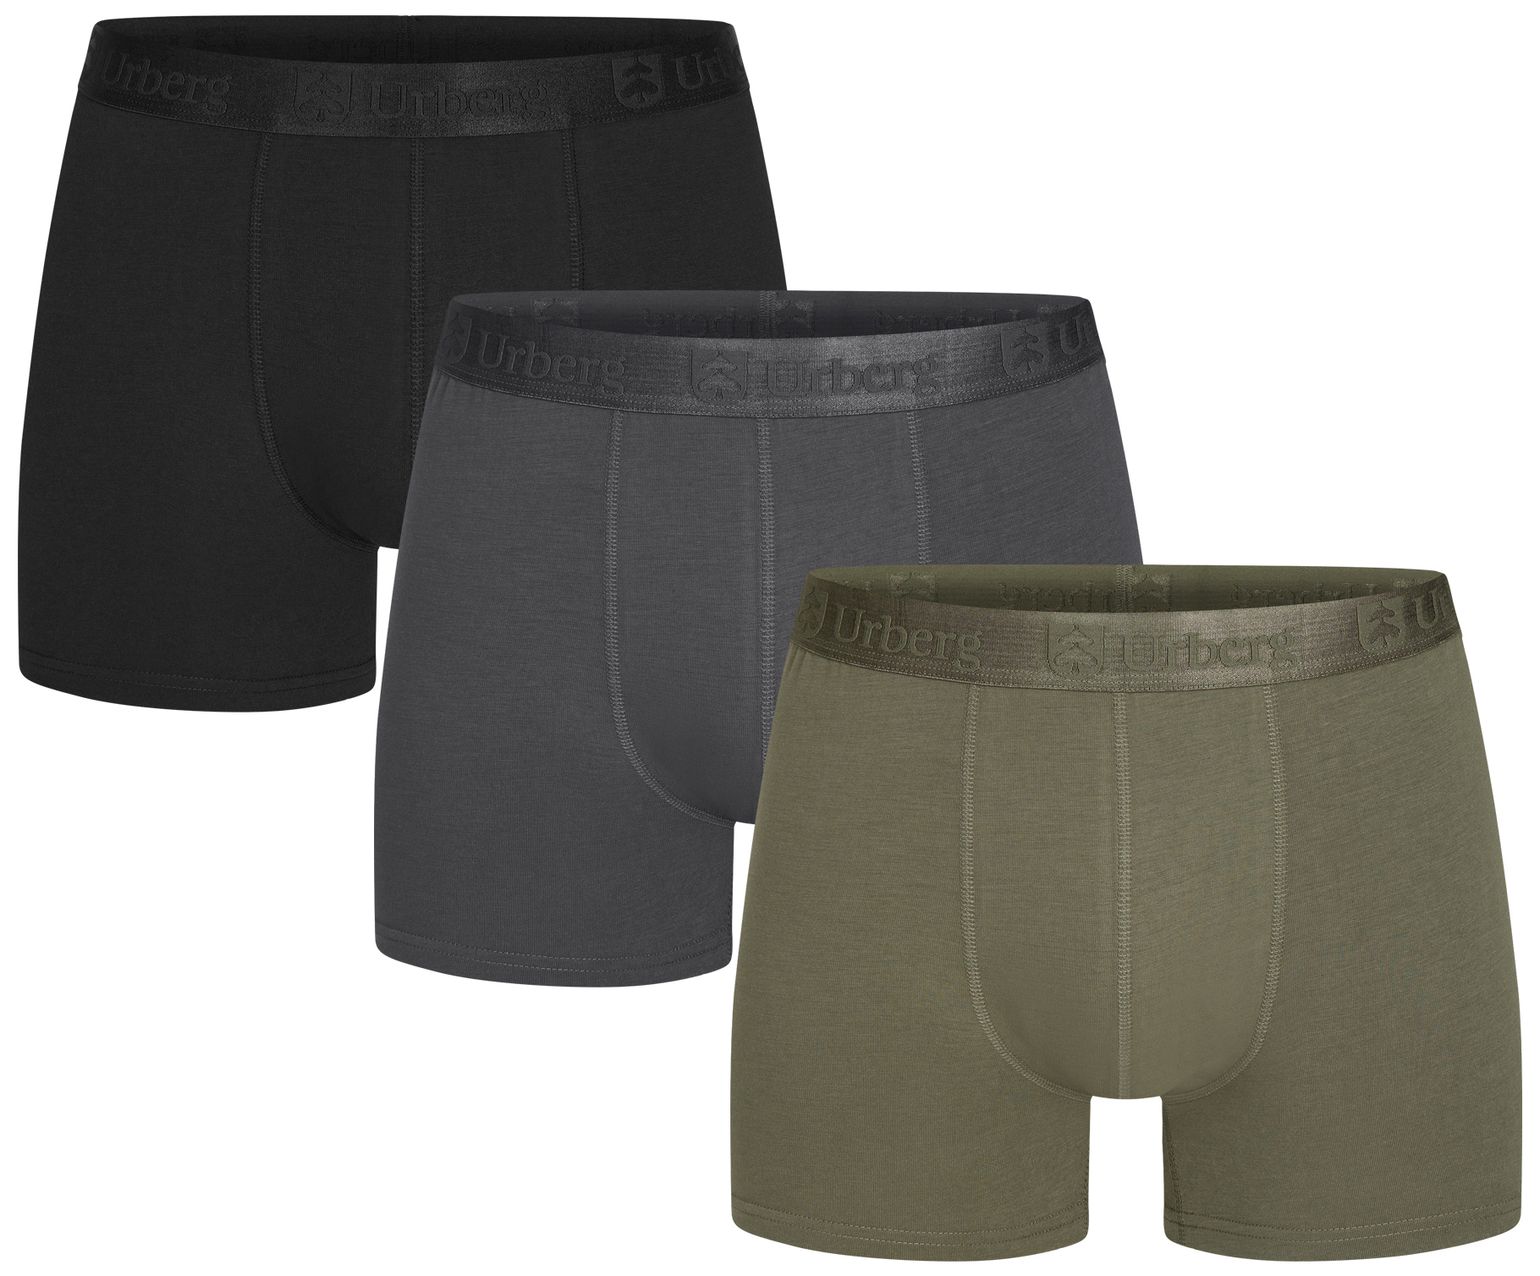 Men's Isane 3-pack Bamboo Boxers Grey/Black/Green